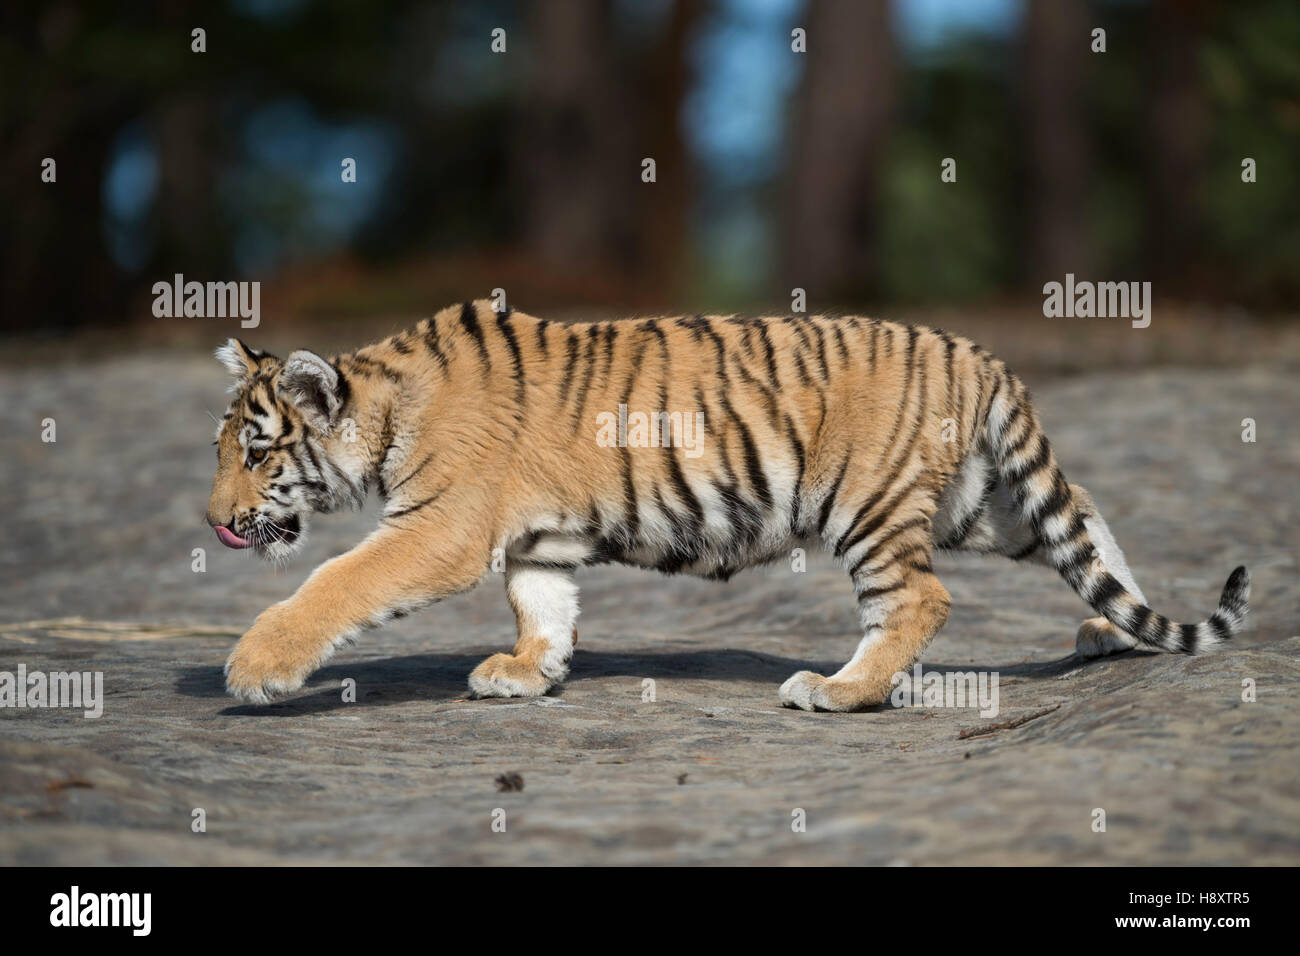 Royal Bengal Tiger ( Panthera tigris ), walks over rocks, licking its tongue, full side view, young animal, soft light. Stock Photo